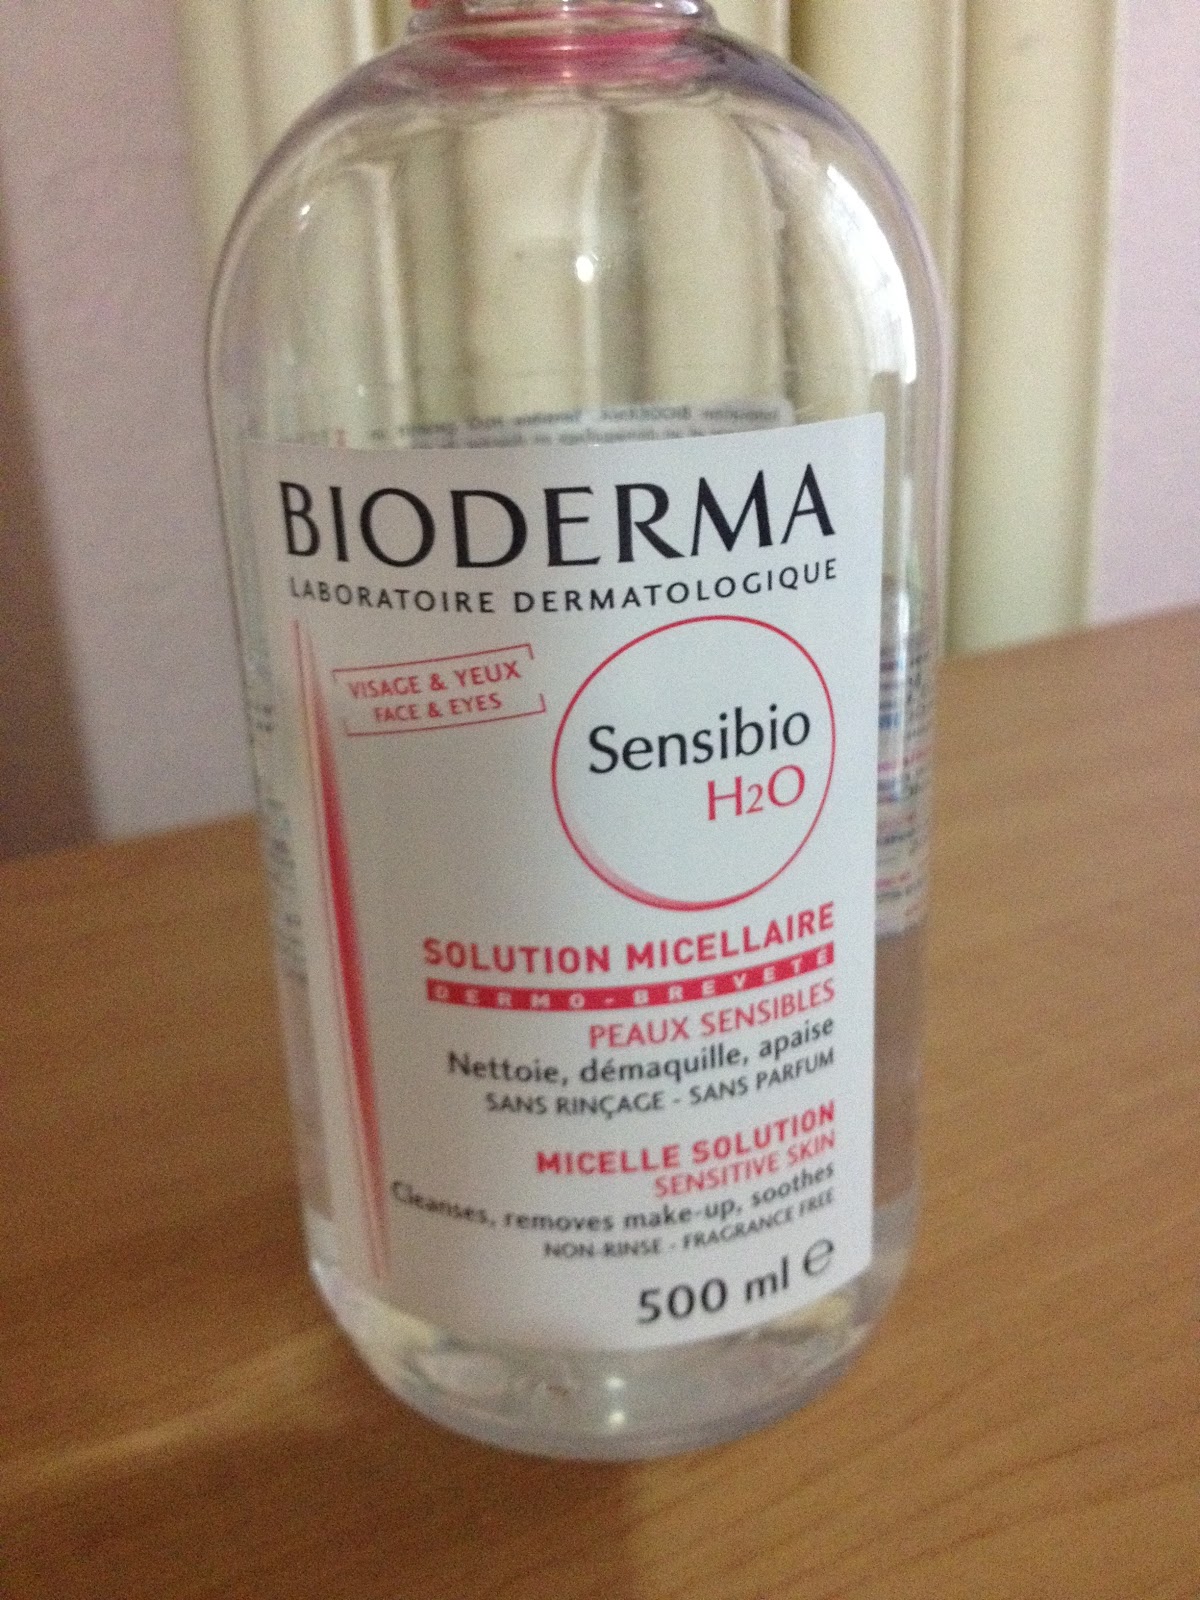 Сенсибио форте. Bioderma Sensibio h2o. Синсибиум форте от биодерм. Биодерма Сенсибио форте. Bioderma Sensibio DS Cream.